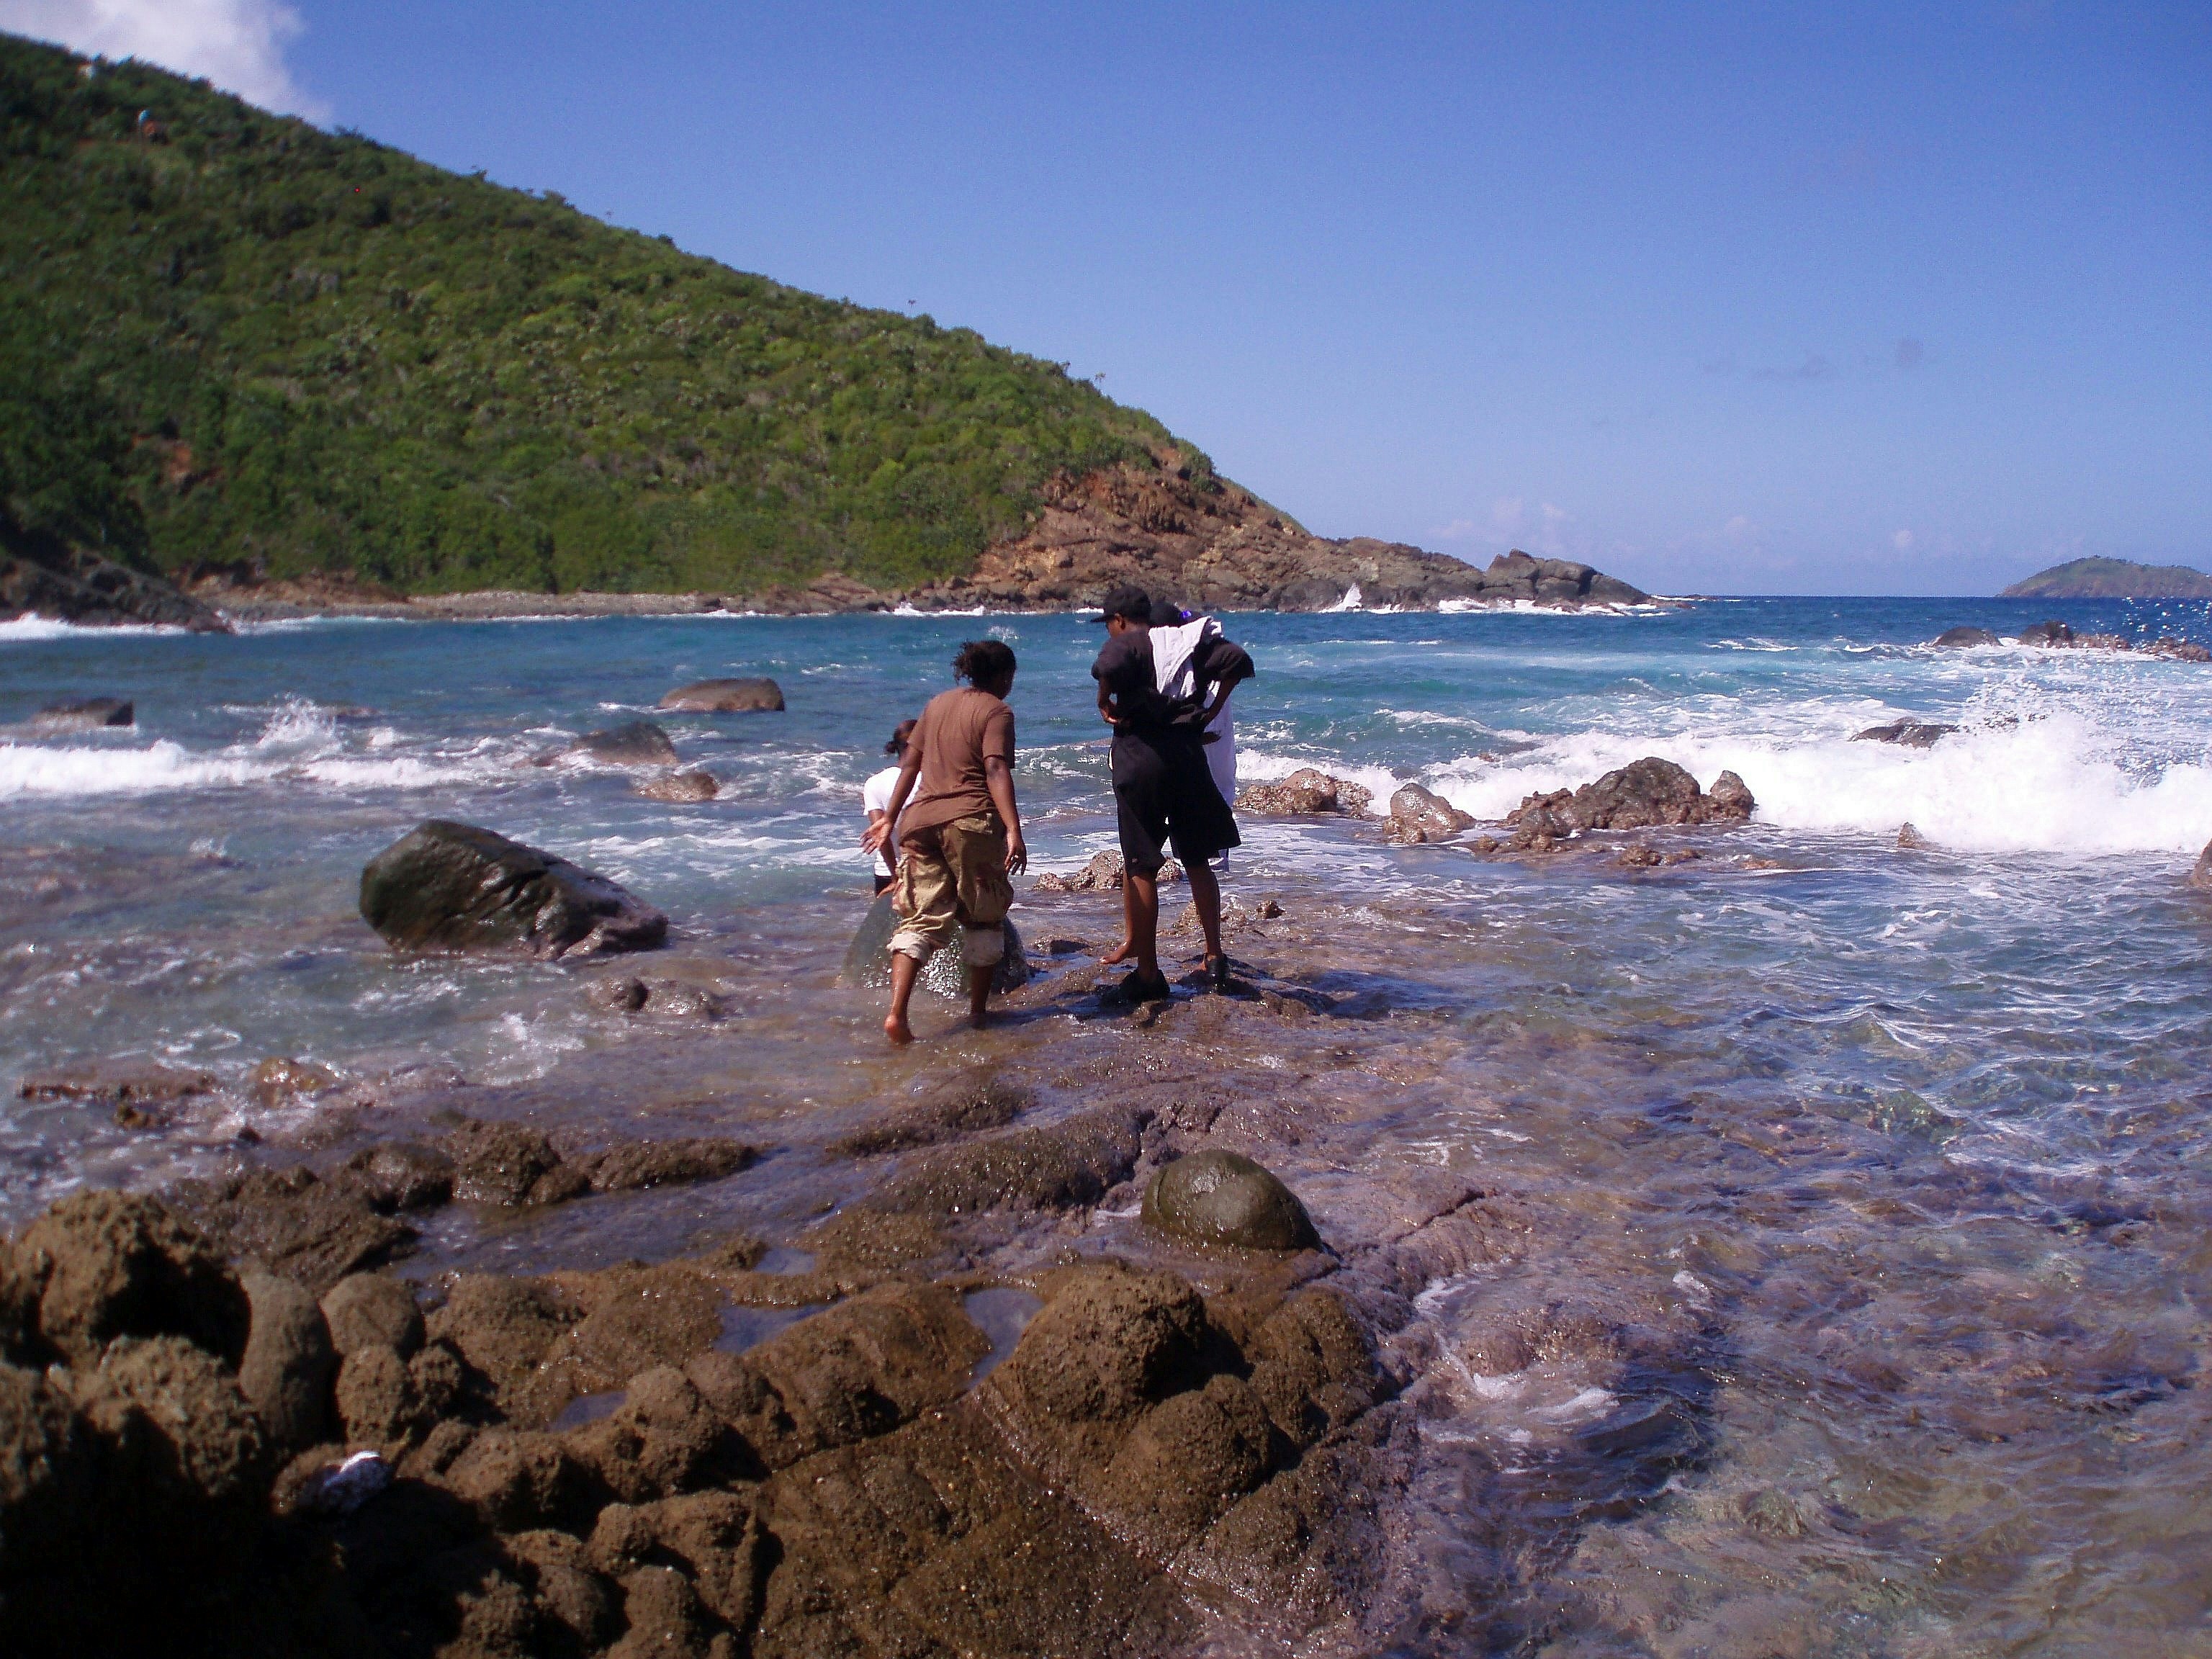 Youth explore tide pool rocks along the island ocean shoreline.